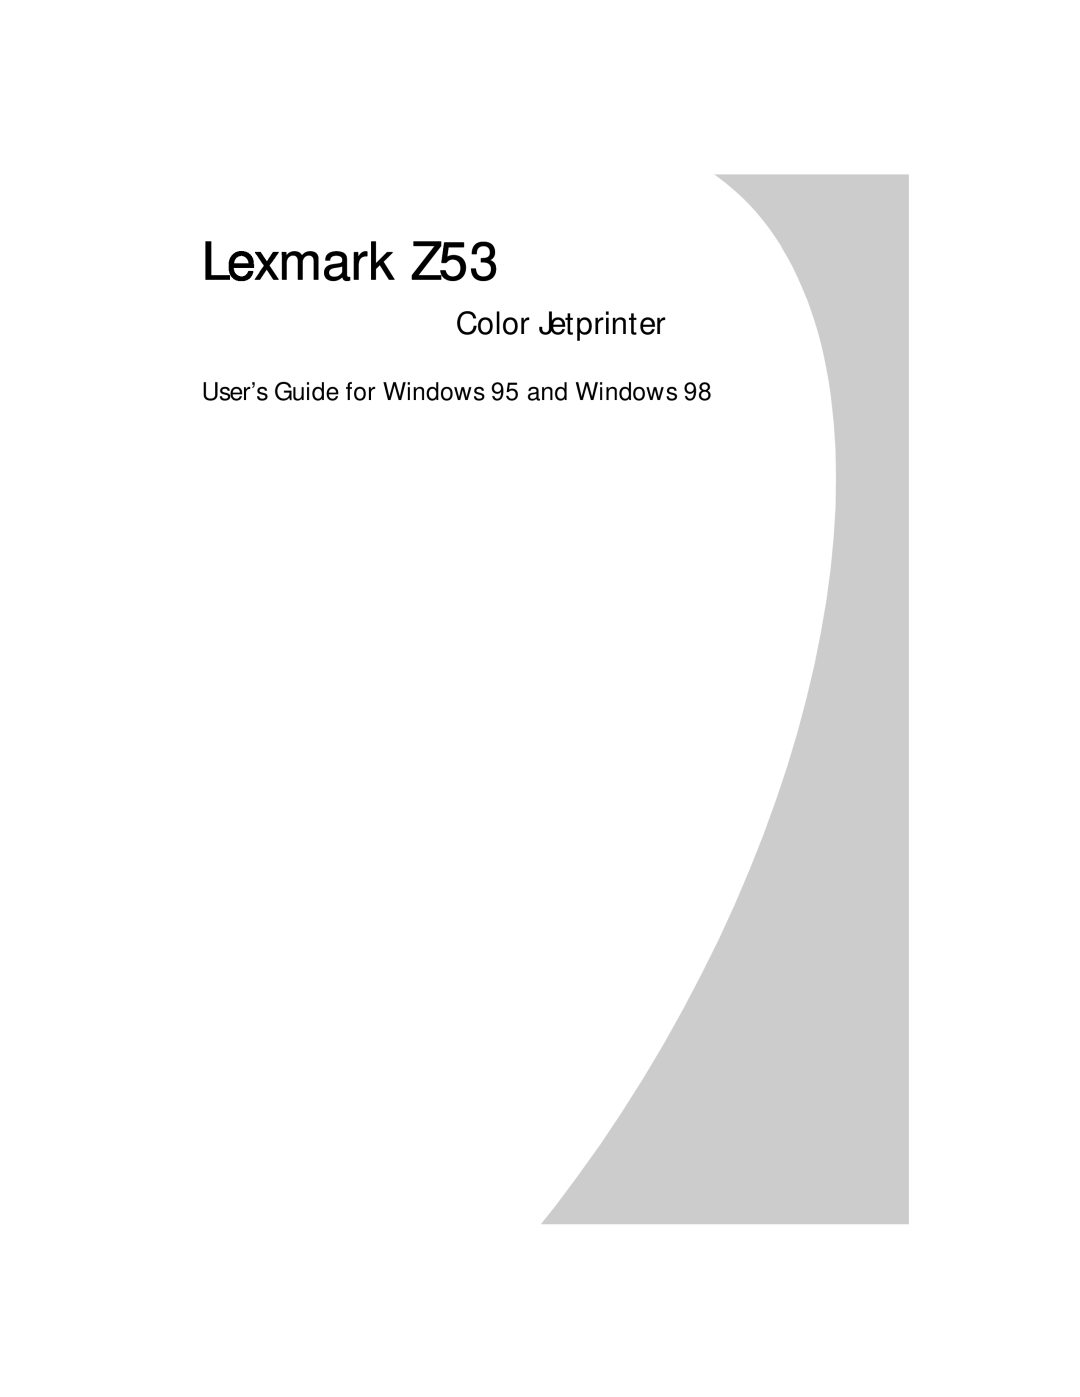 Lexmark manual Lexmark Z53, Color Jetprinter, User’s Guide for Windows 95 and Windows 